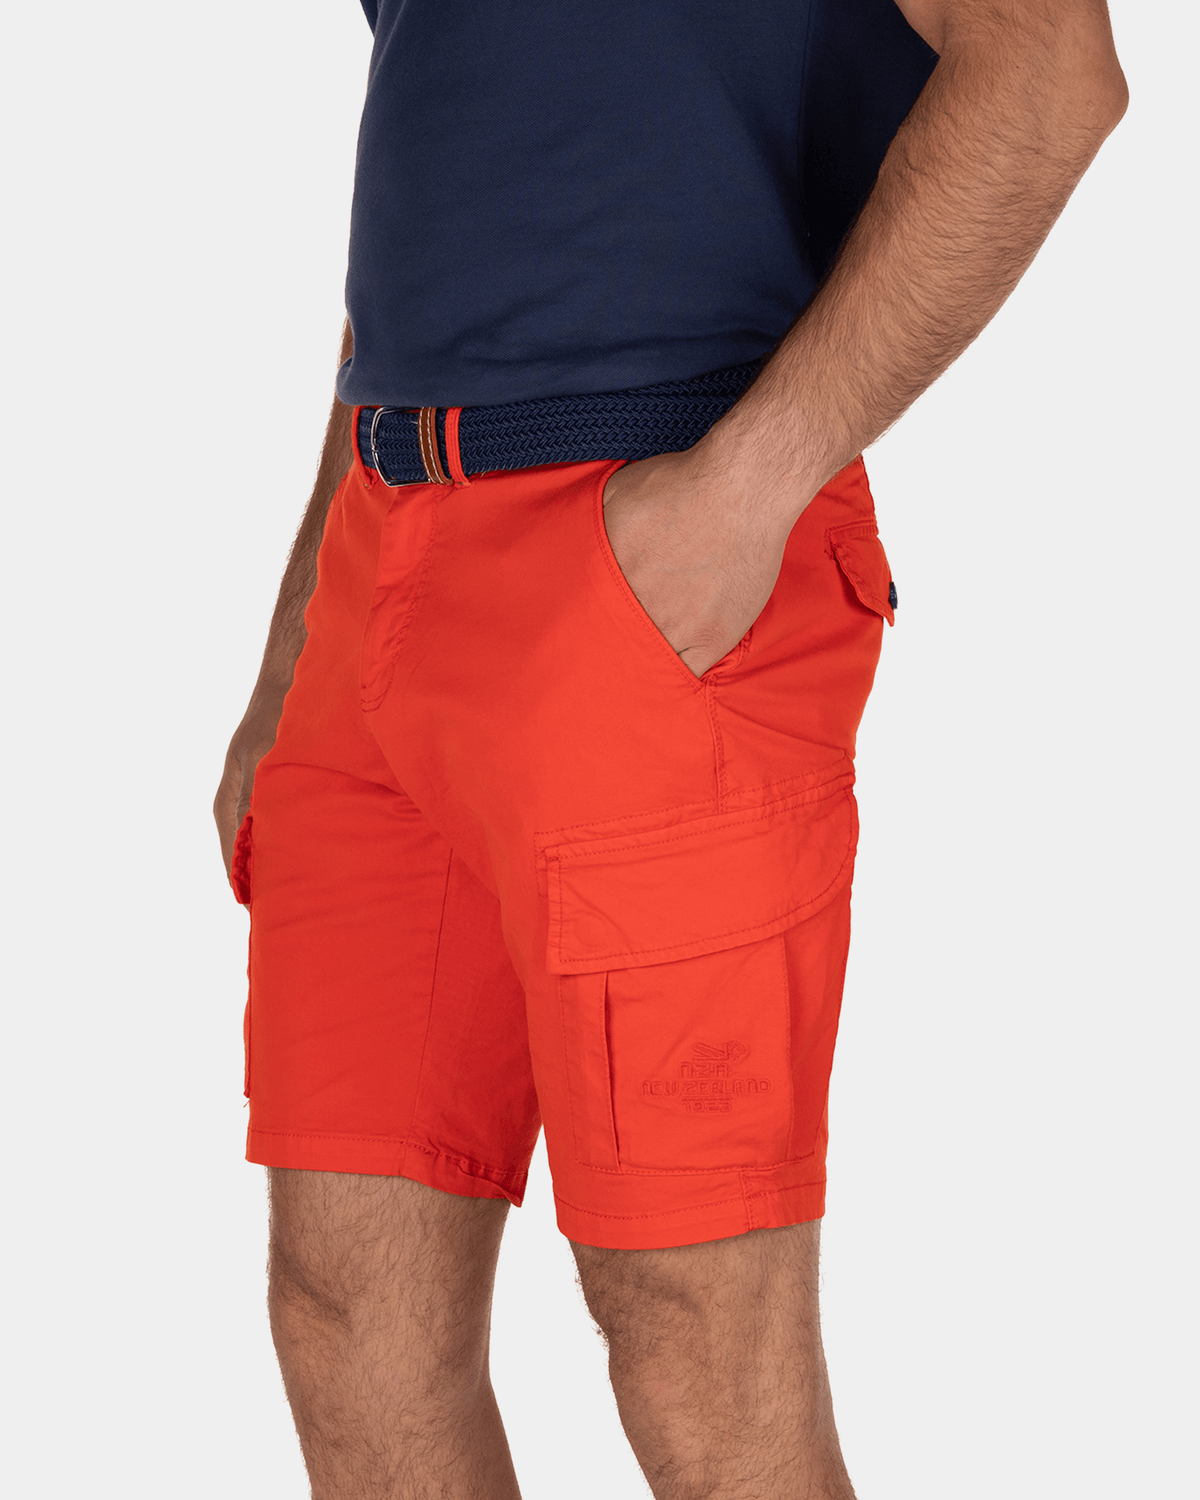 Cargo shorts Mission Bay - Pomgrate Orange